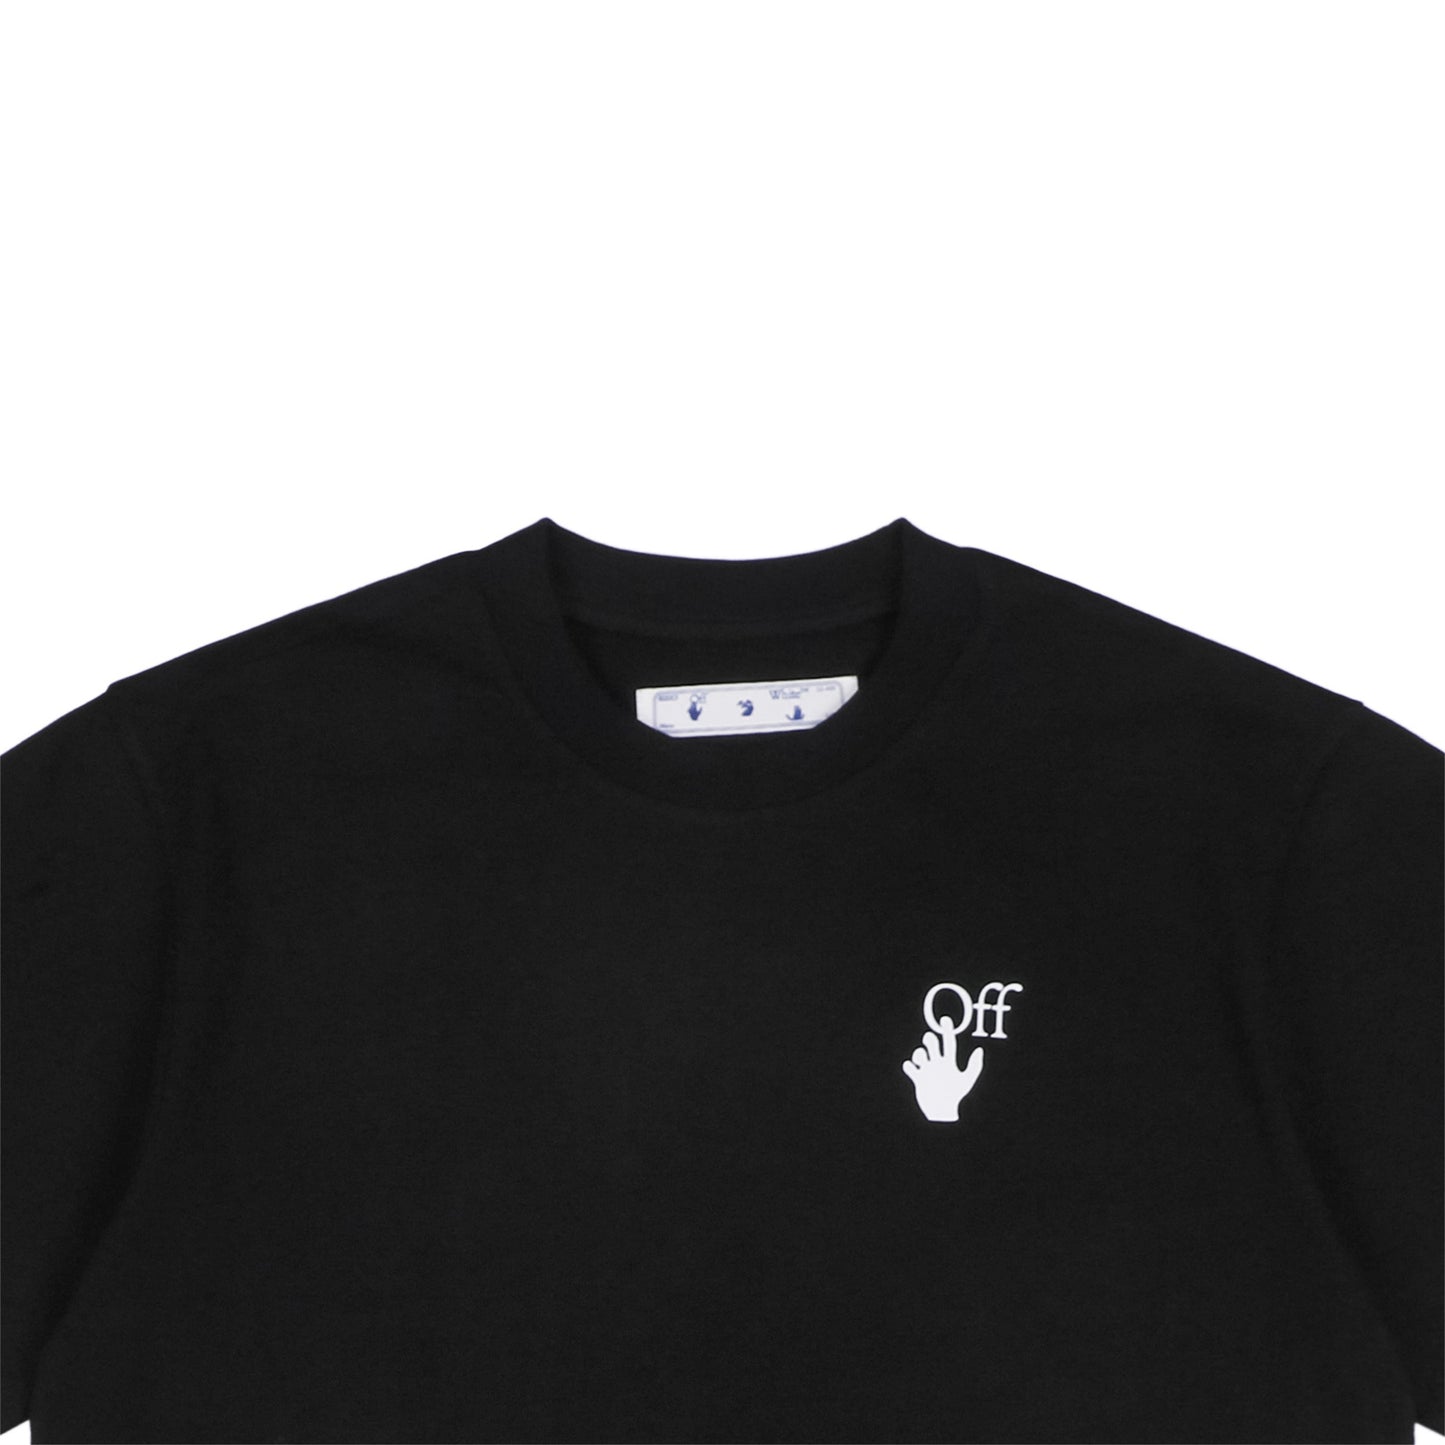 OW Black T-Shirt 6